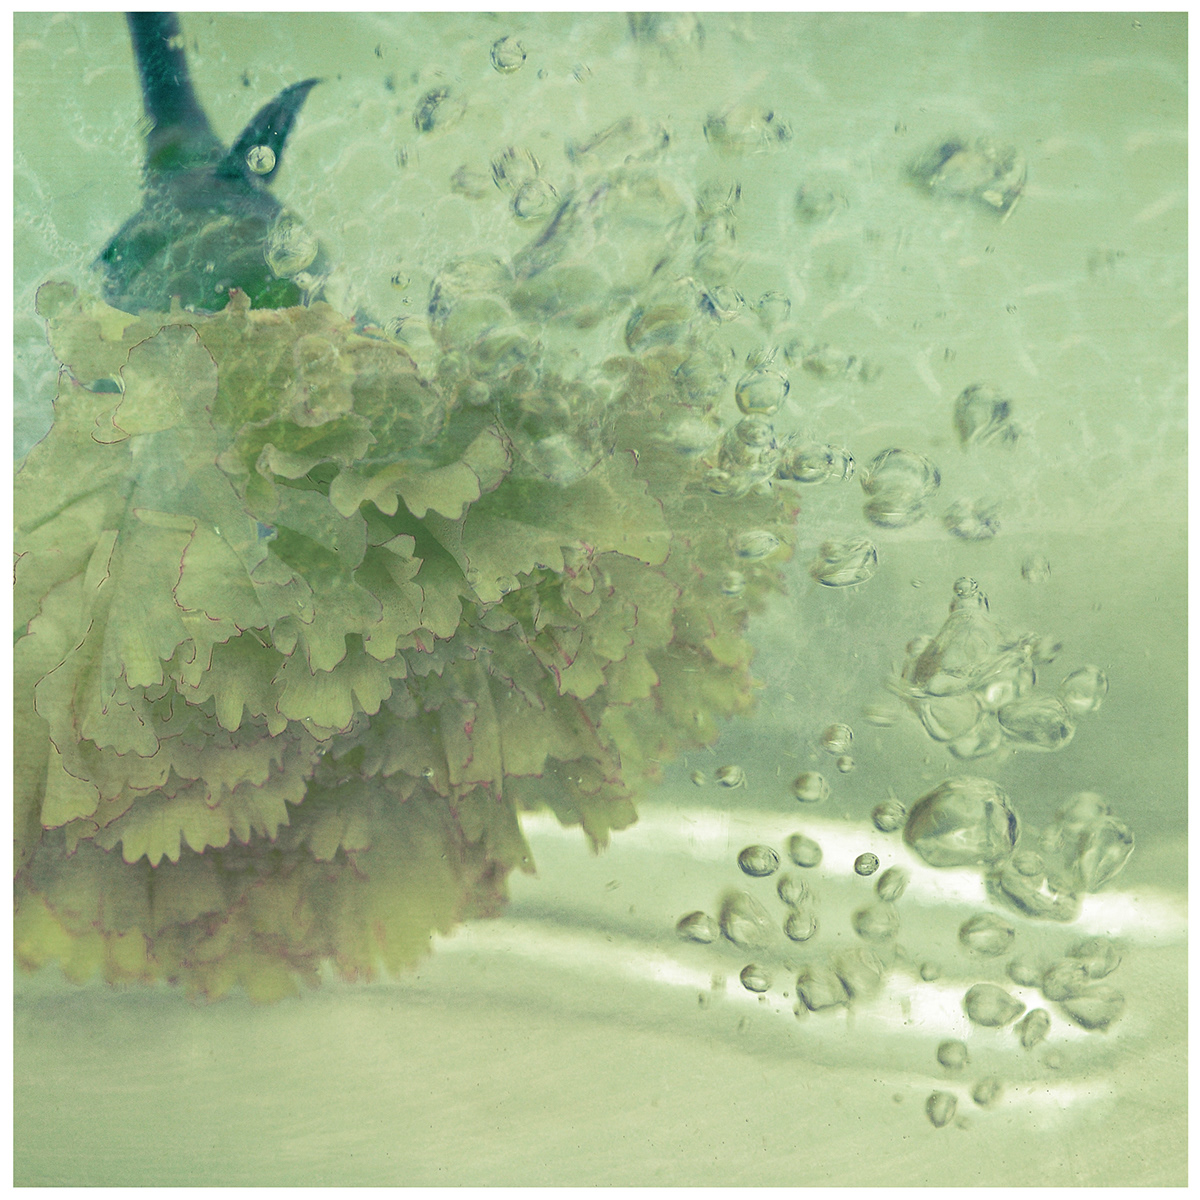 Flowers blossoms water diving underwater macro